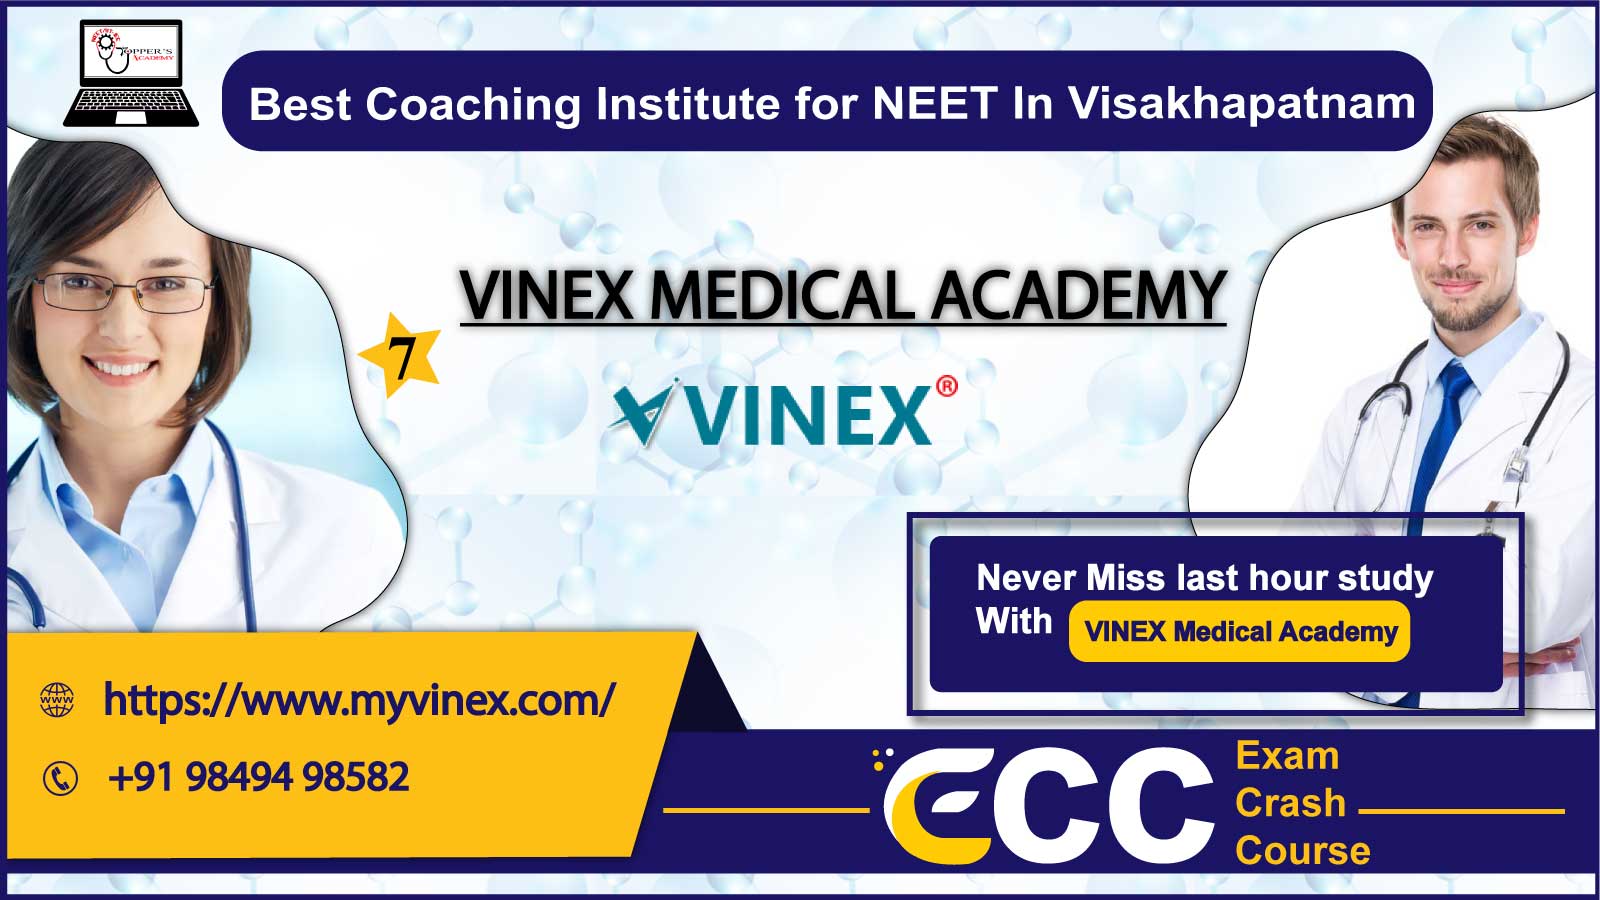 VINEX Medical Academy In Visakhapatnam